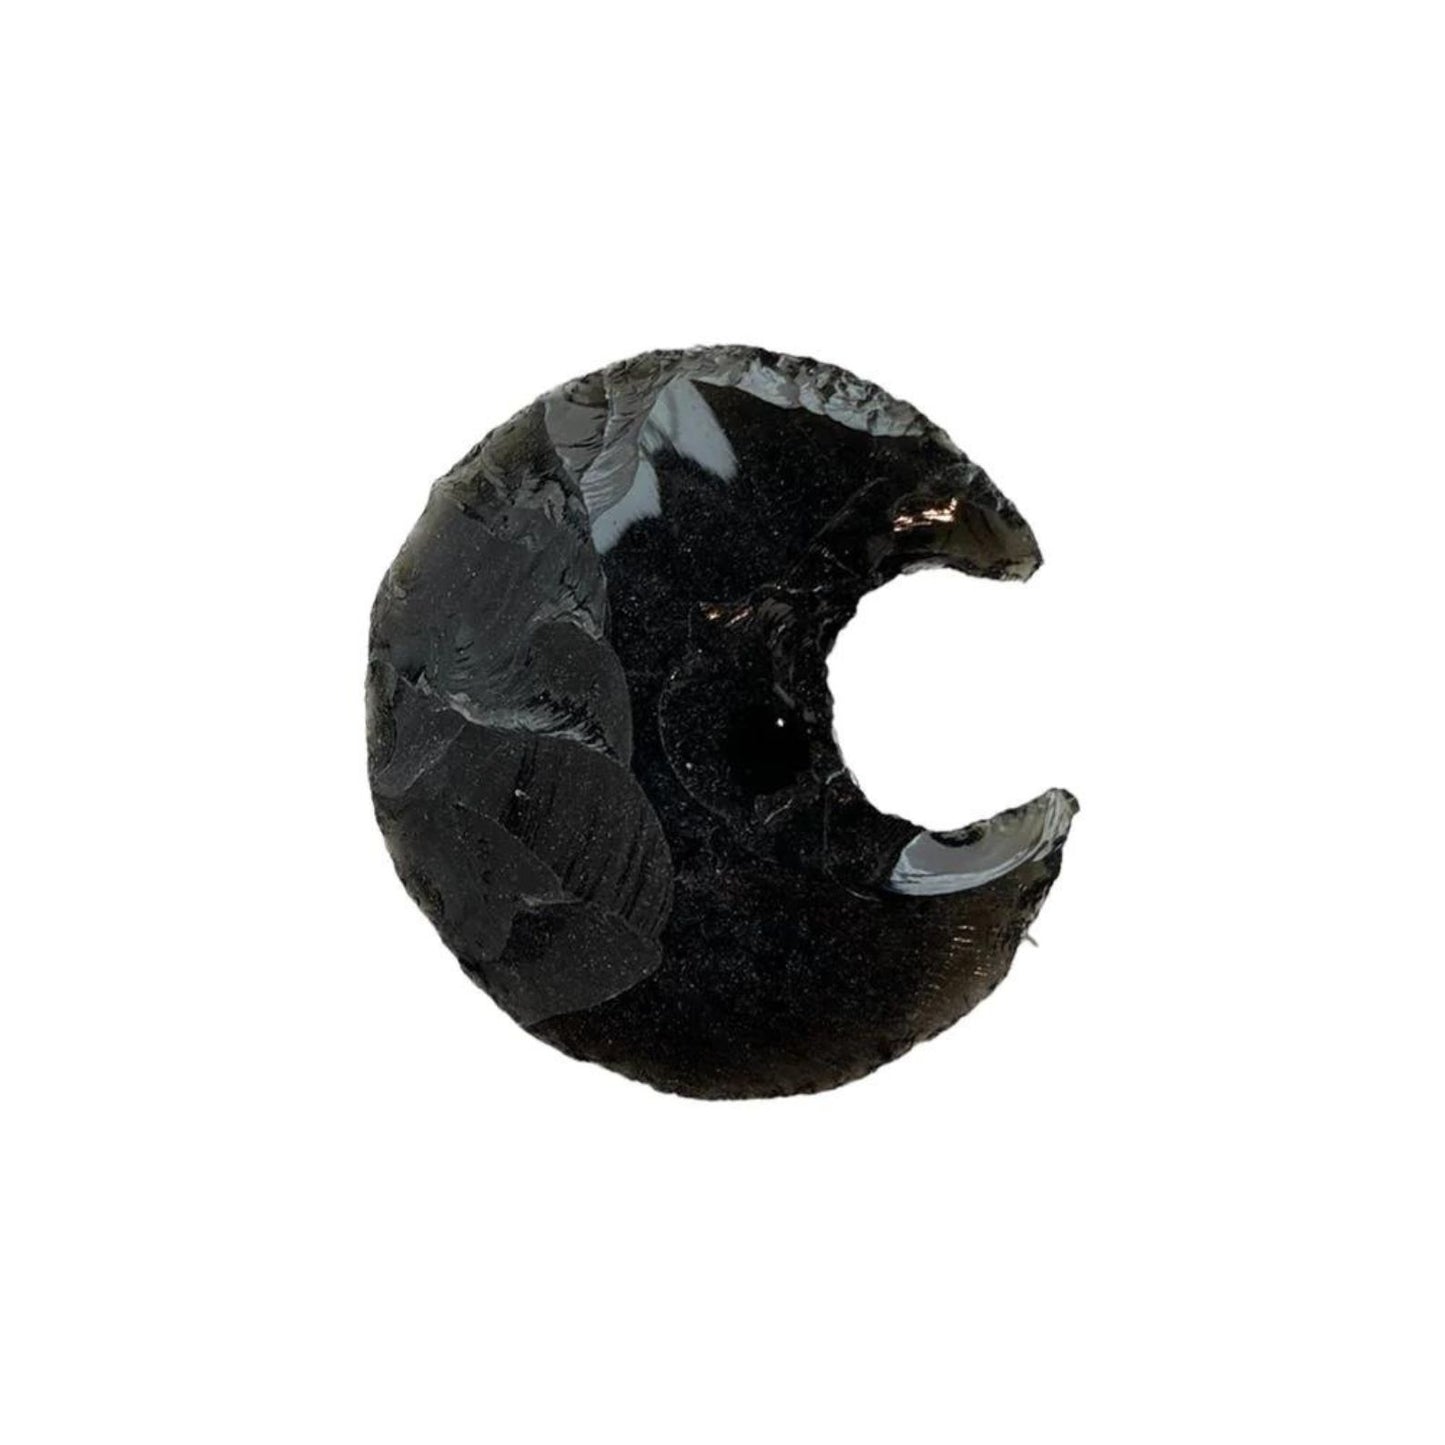 Black obsidian crystal moon 3x2cm